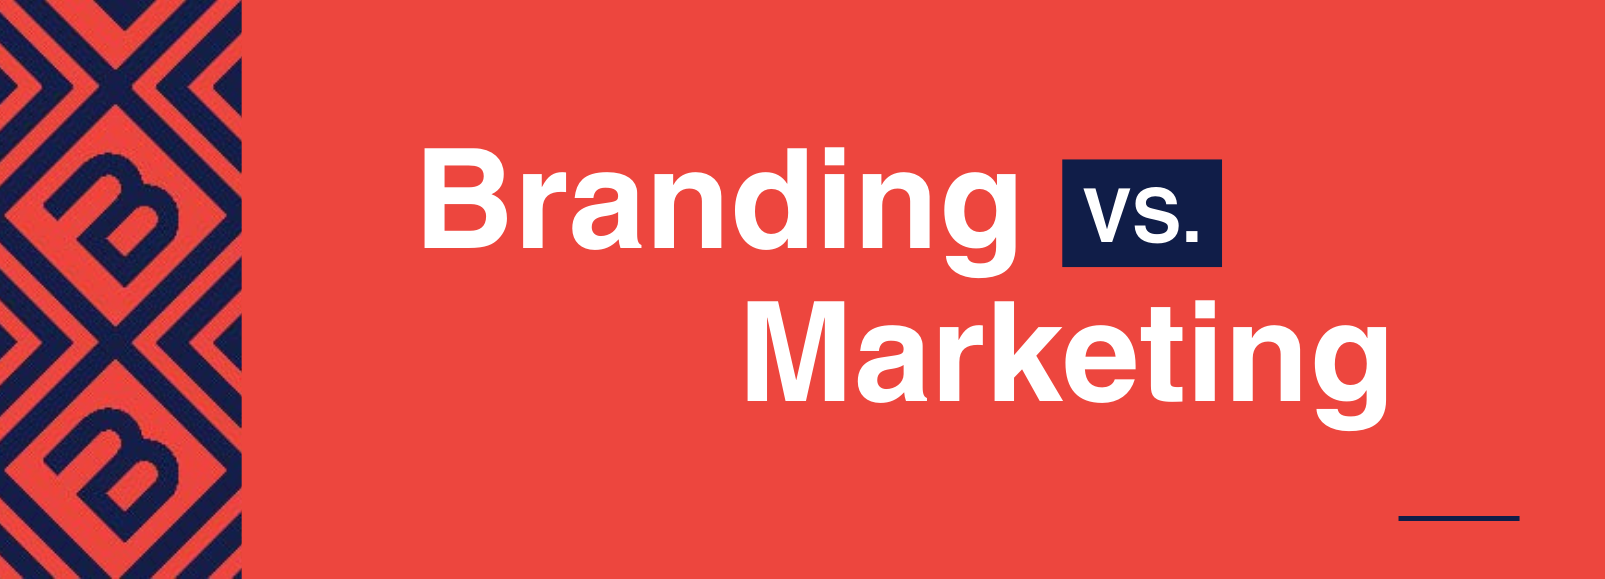 Branding-Marketing-Difference-Header-Bold-Entity